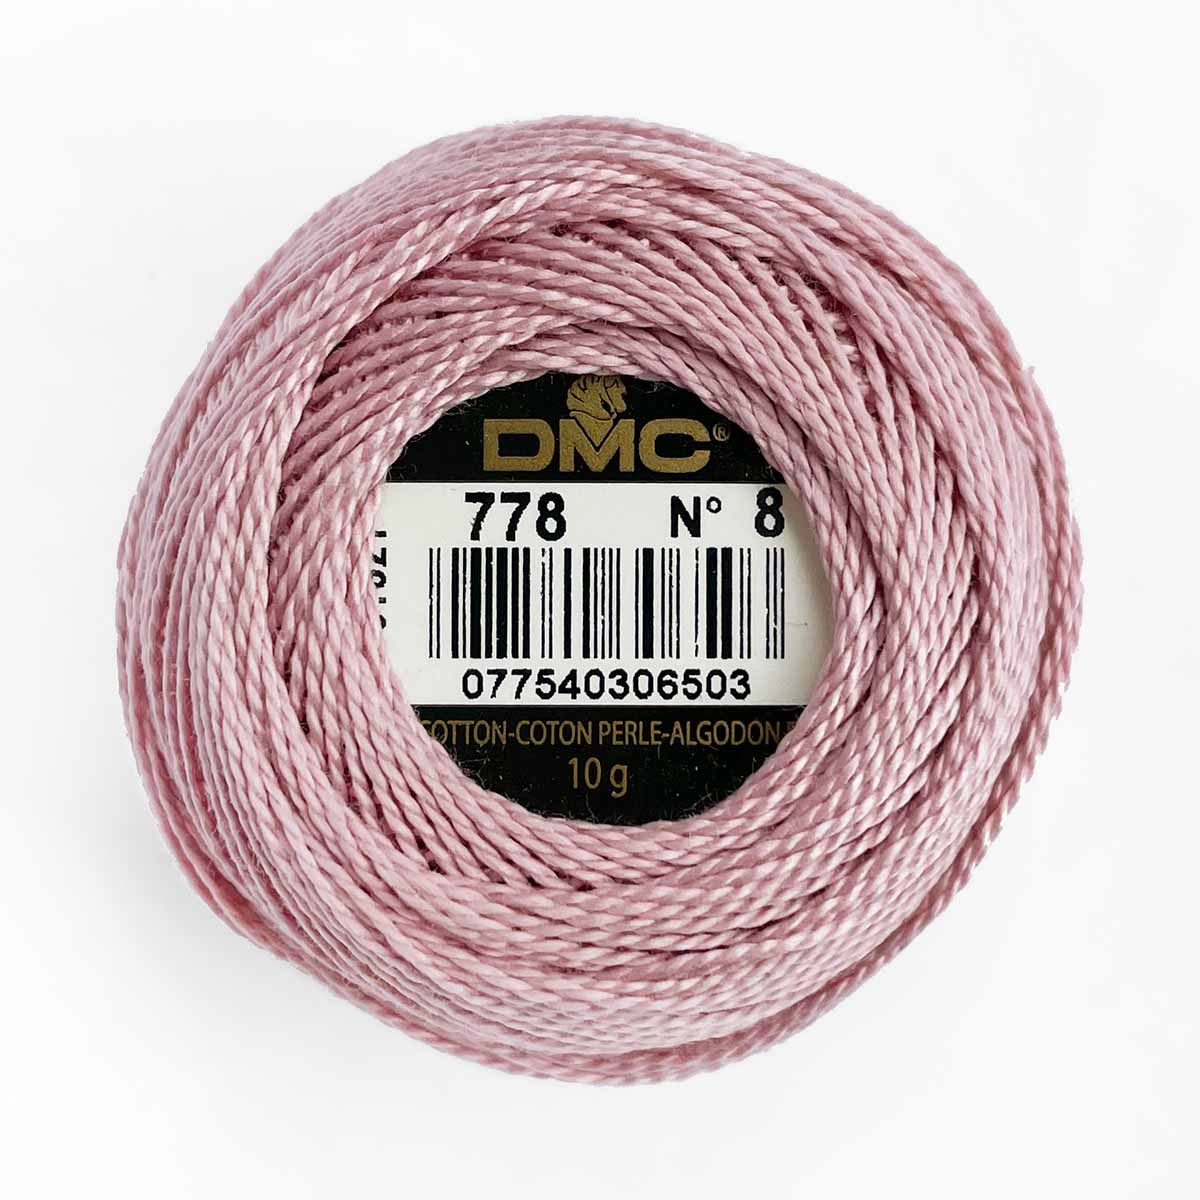 DMC Perle Cotton size 8 - 077540044023